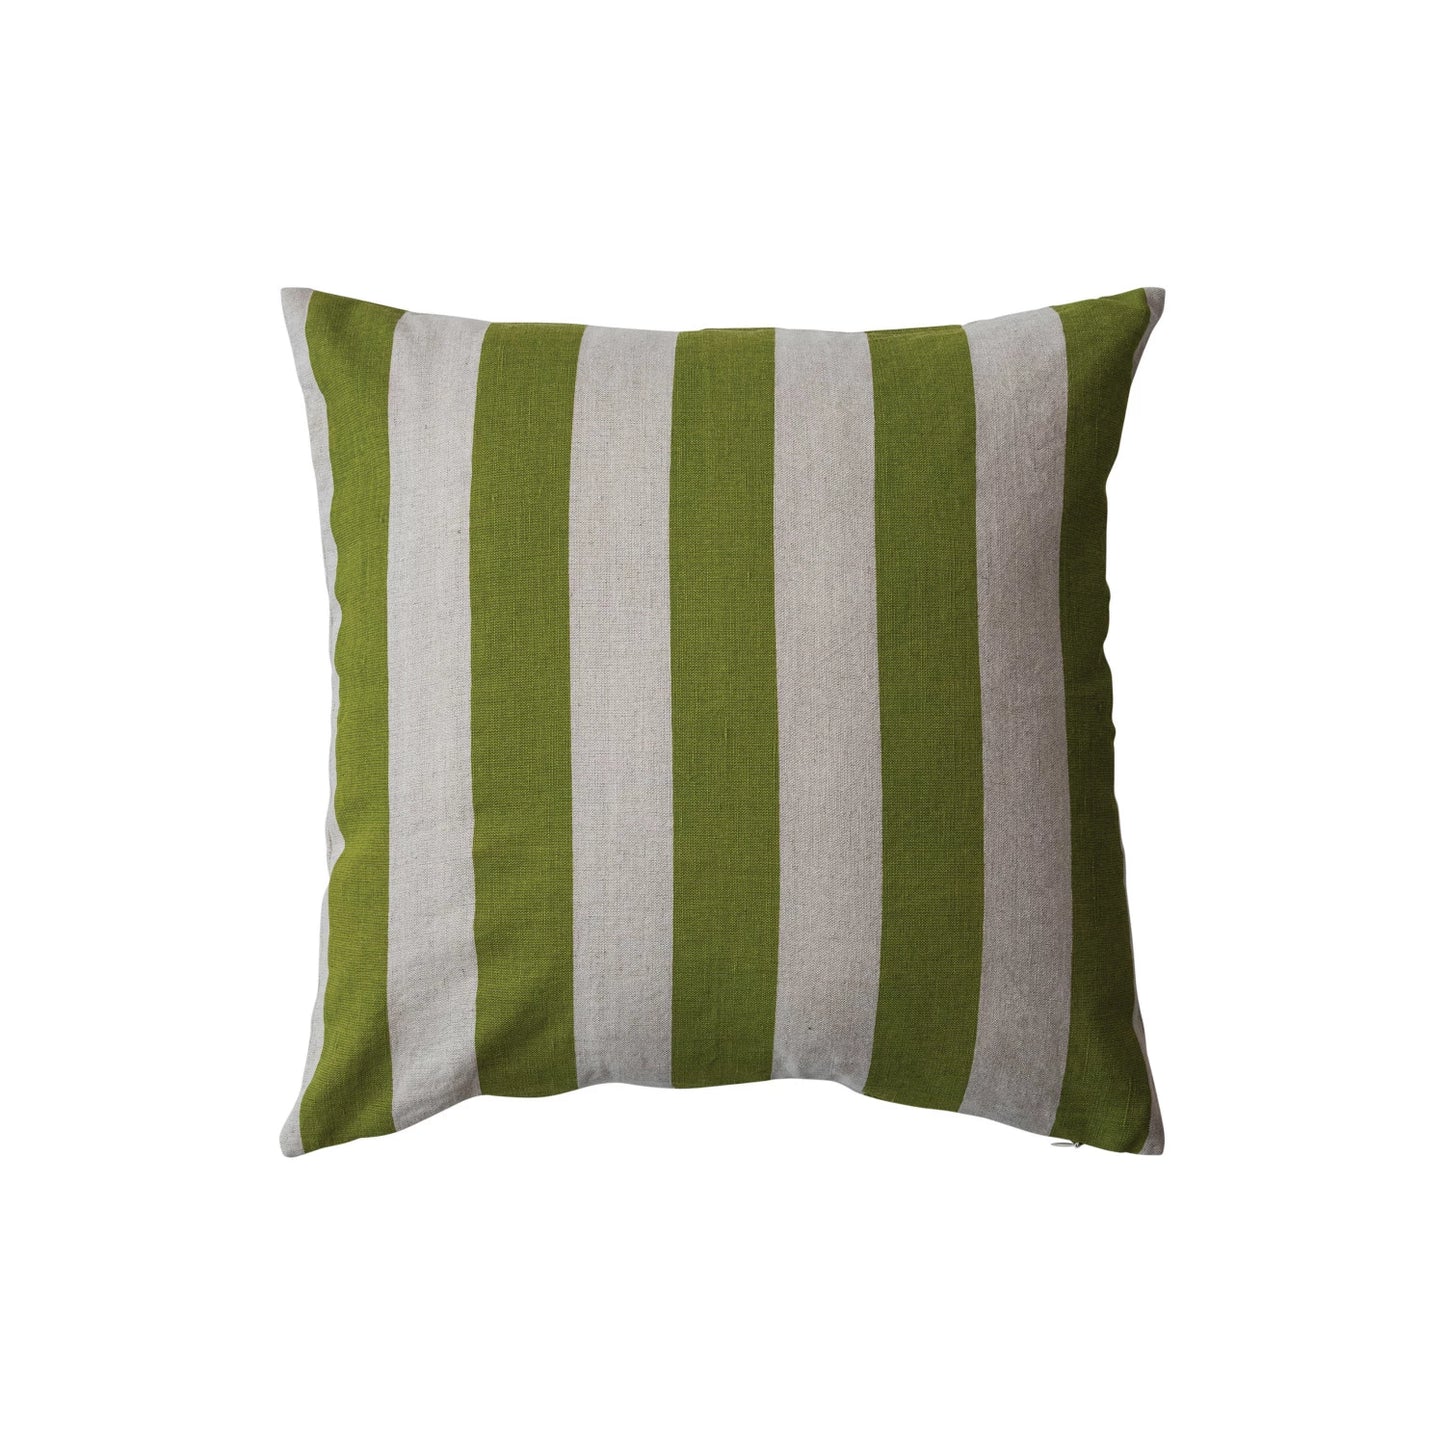 Pillow, Square Cotton & Linen Printed w/ Stripes, Green